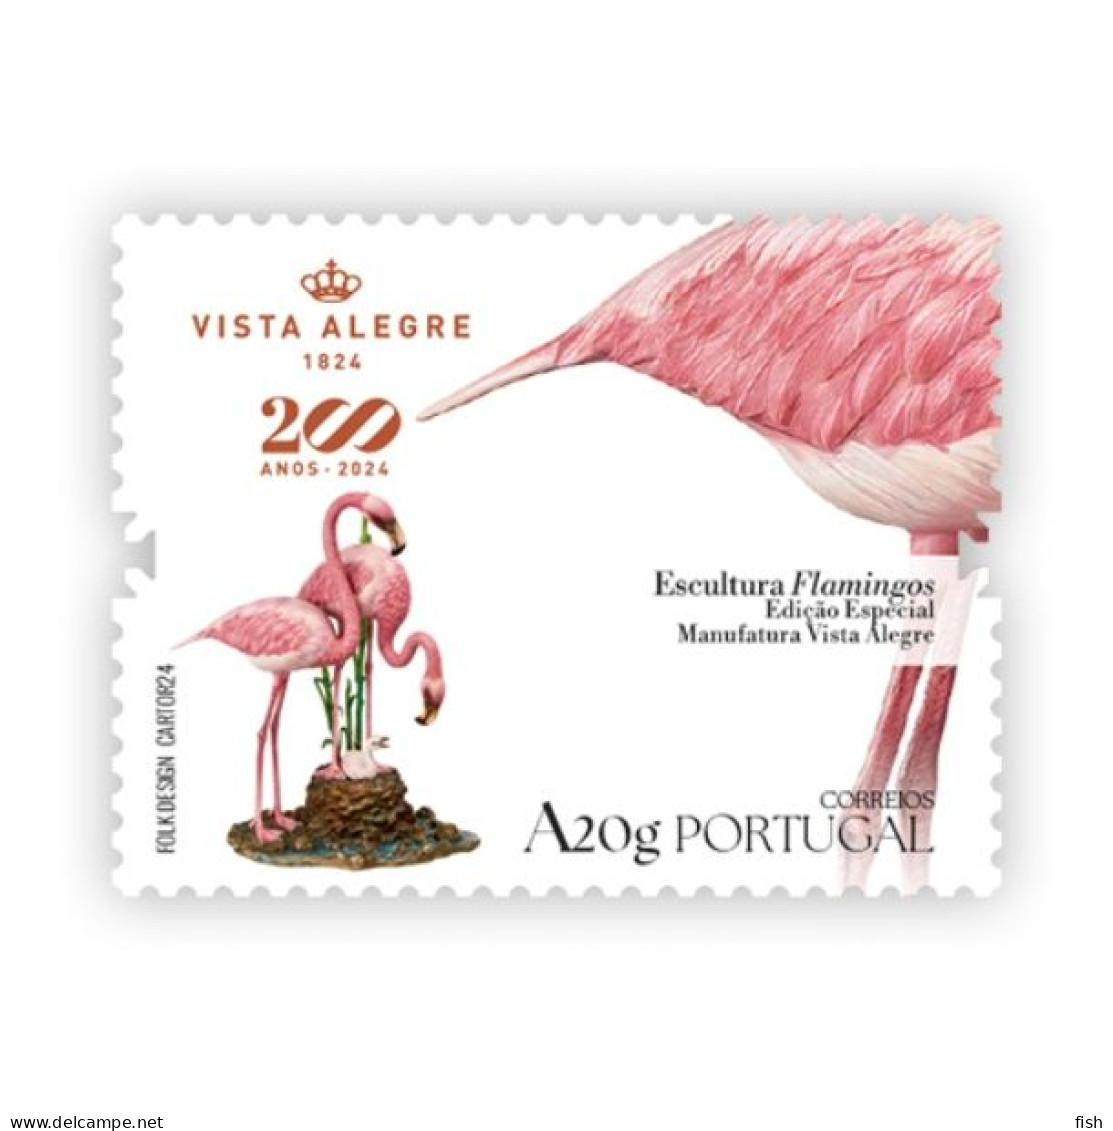 Portugal ** & 200 Years Of Vista Alegre, Flamingo Sculpture, Special Edition Manufatura Vista Alegre 1824-2024 (799) - Fabrieken En Industrieën